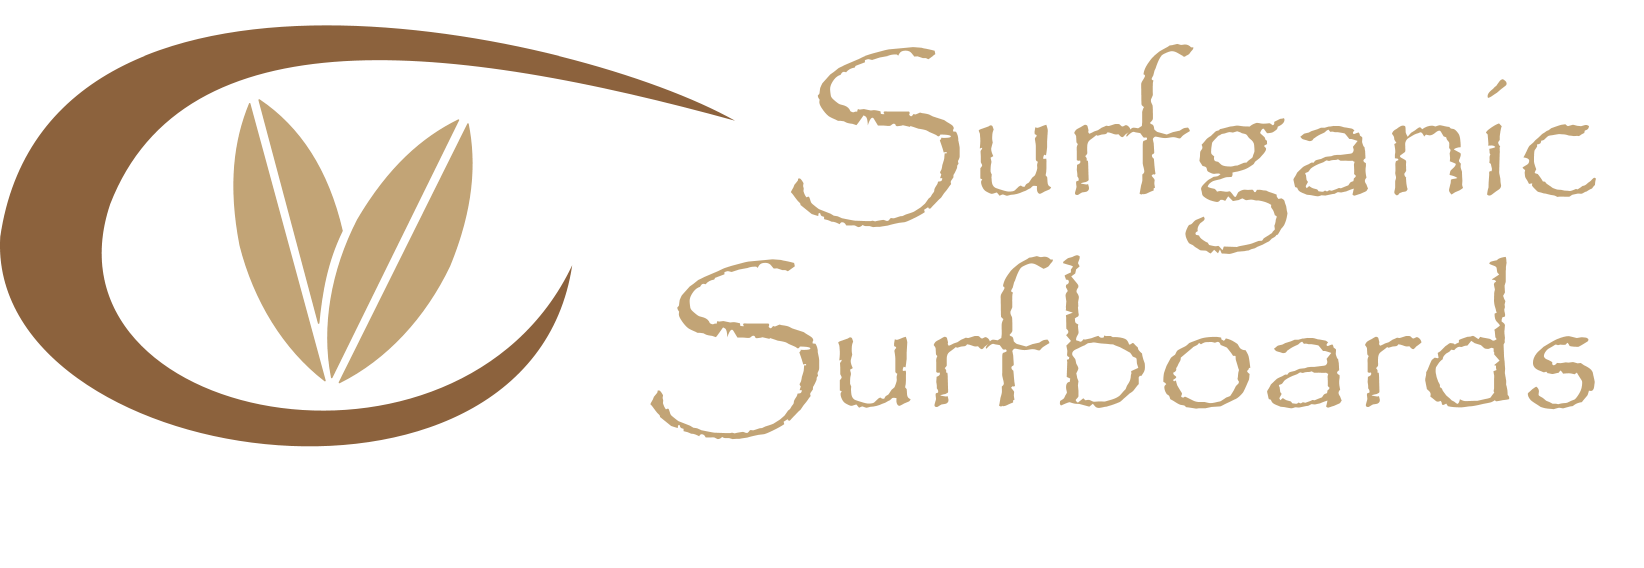 Surfganic Surfboards